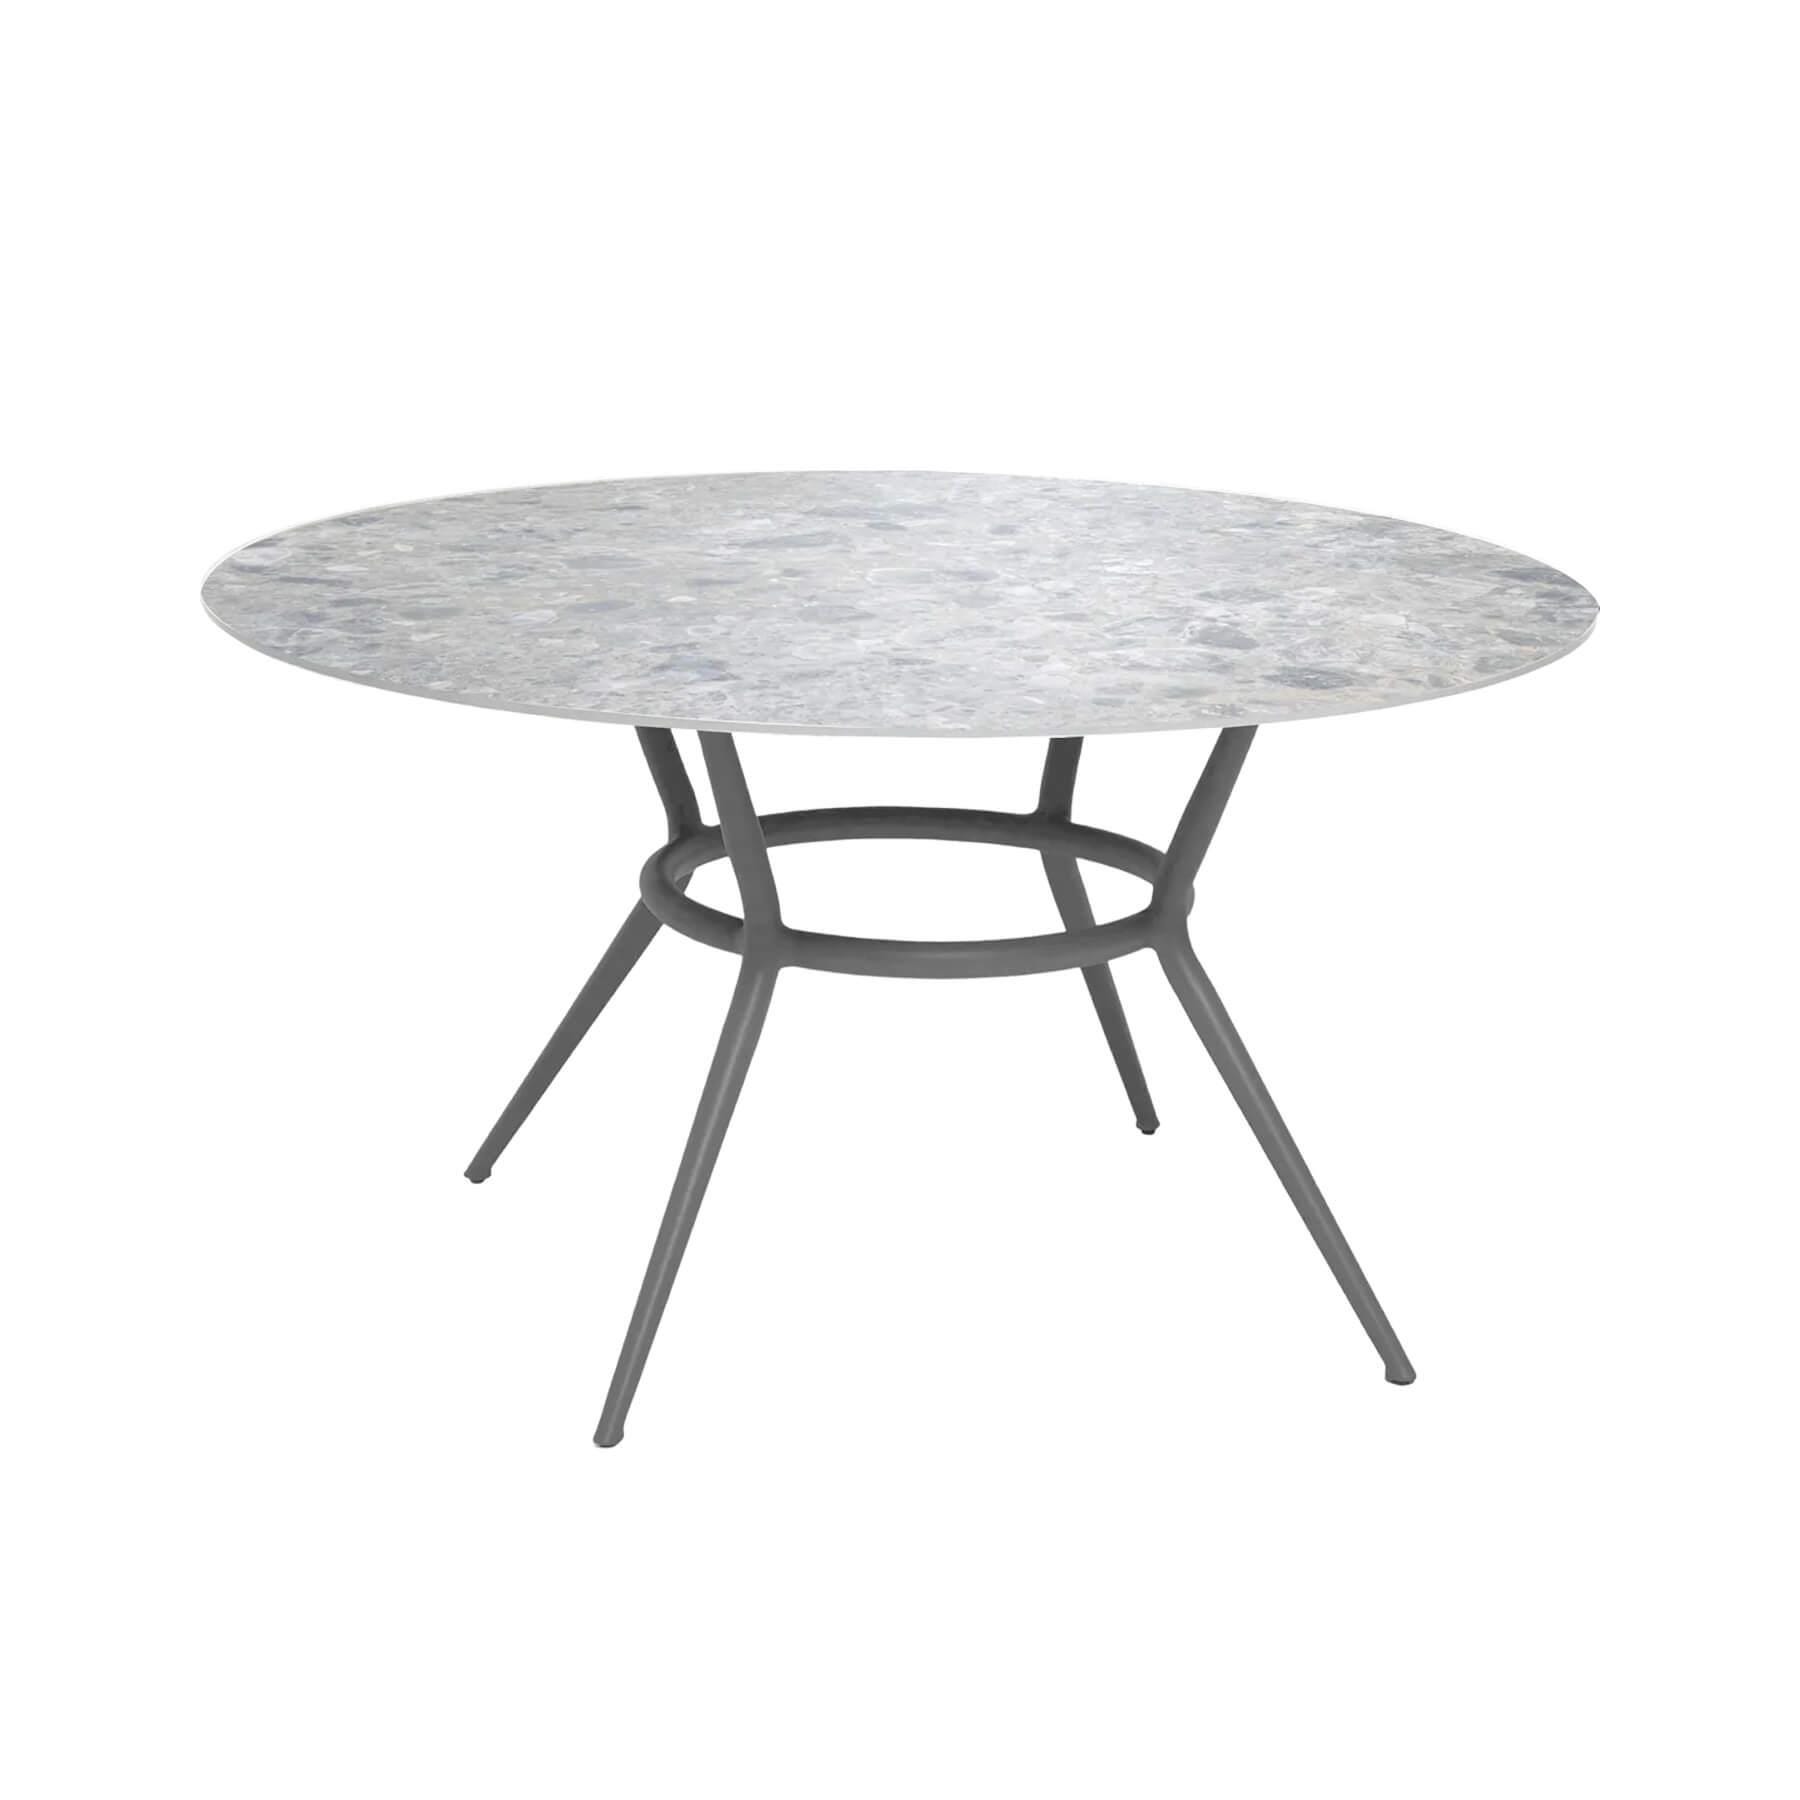 Caneline Joy Outdoor Dining Table Round Ceramic Multi Colour Top Light Grey Legs